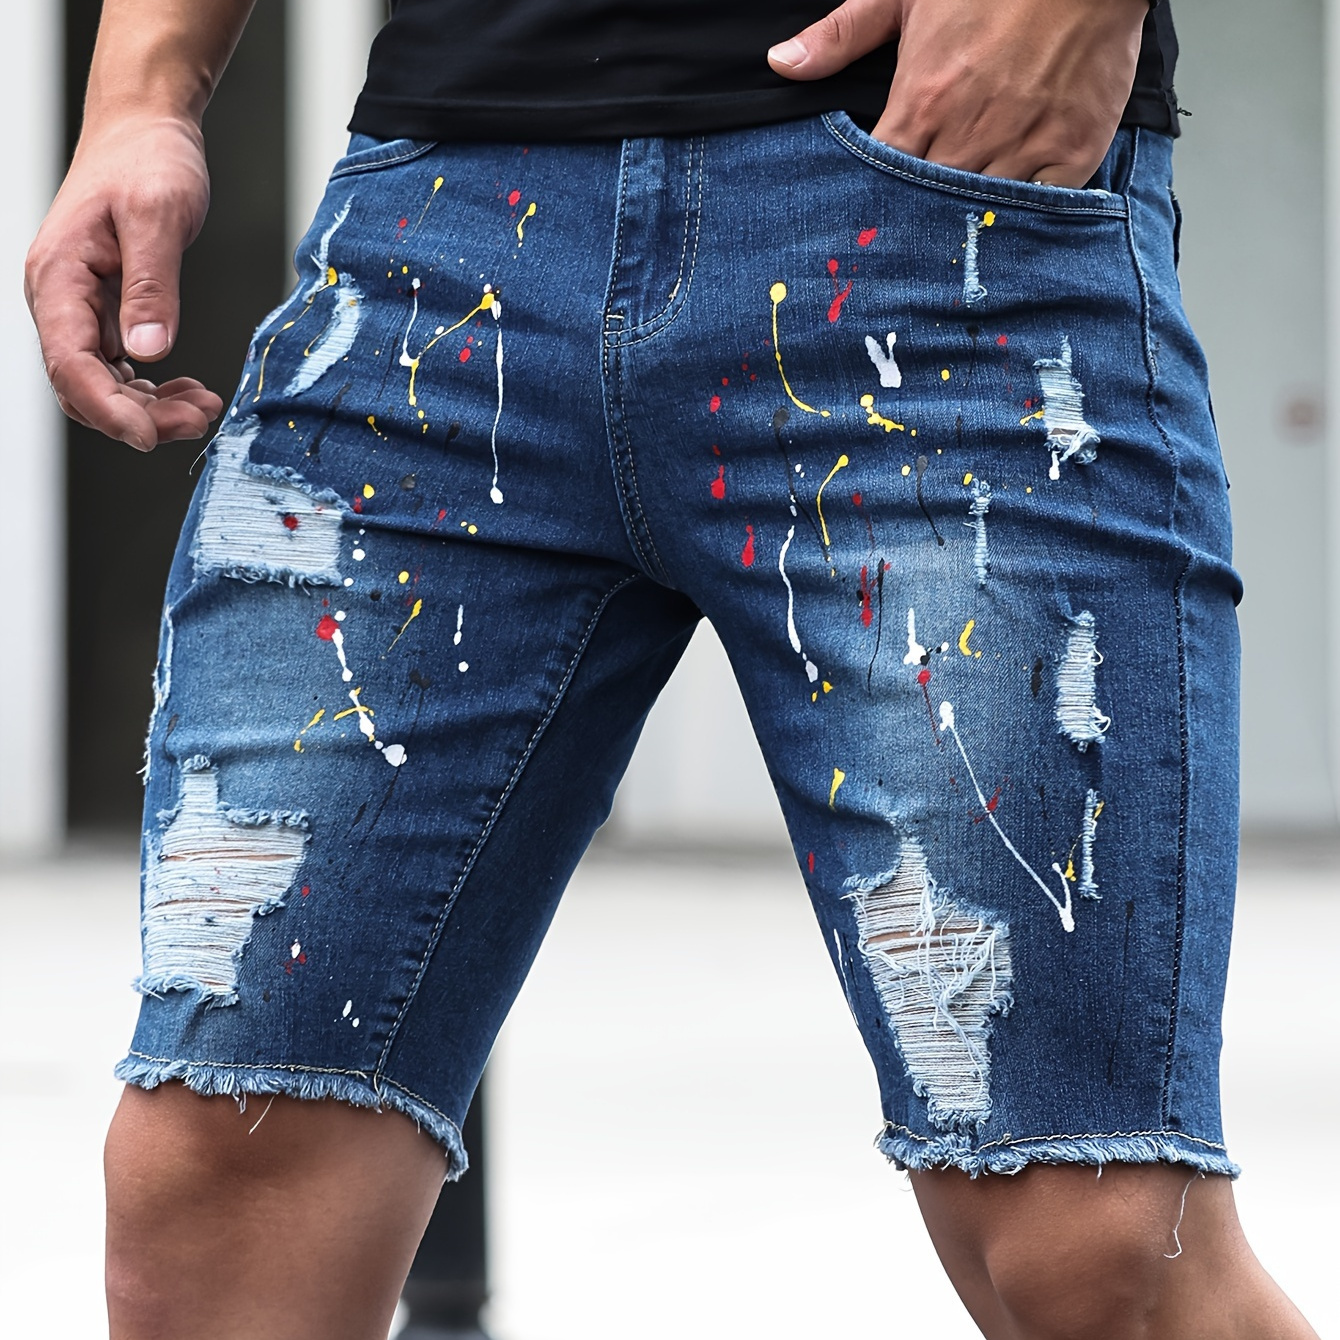 

Men's Skinny Denim Shorts With Oil Splash Pattern, Summer Stylish Leisure Jorts For Males